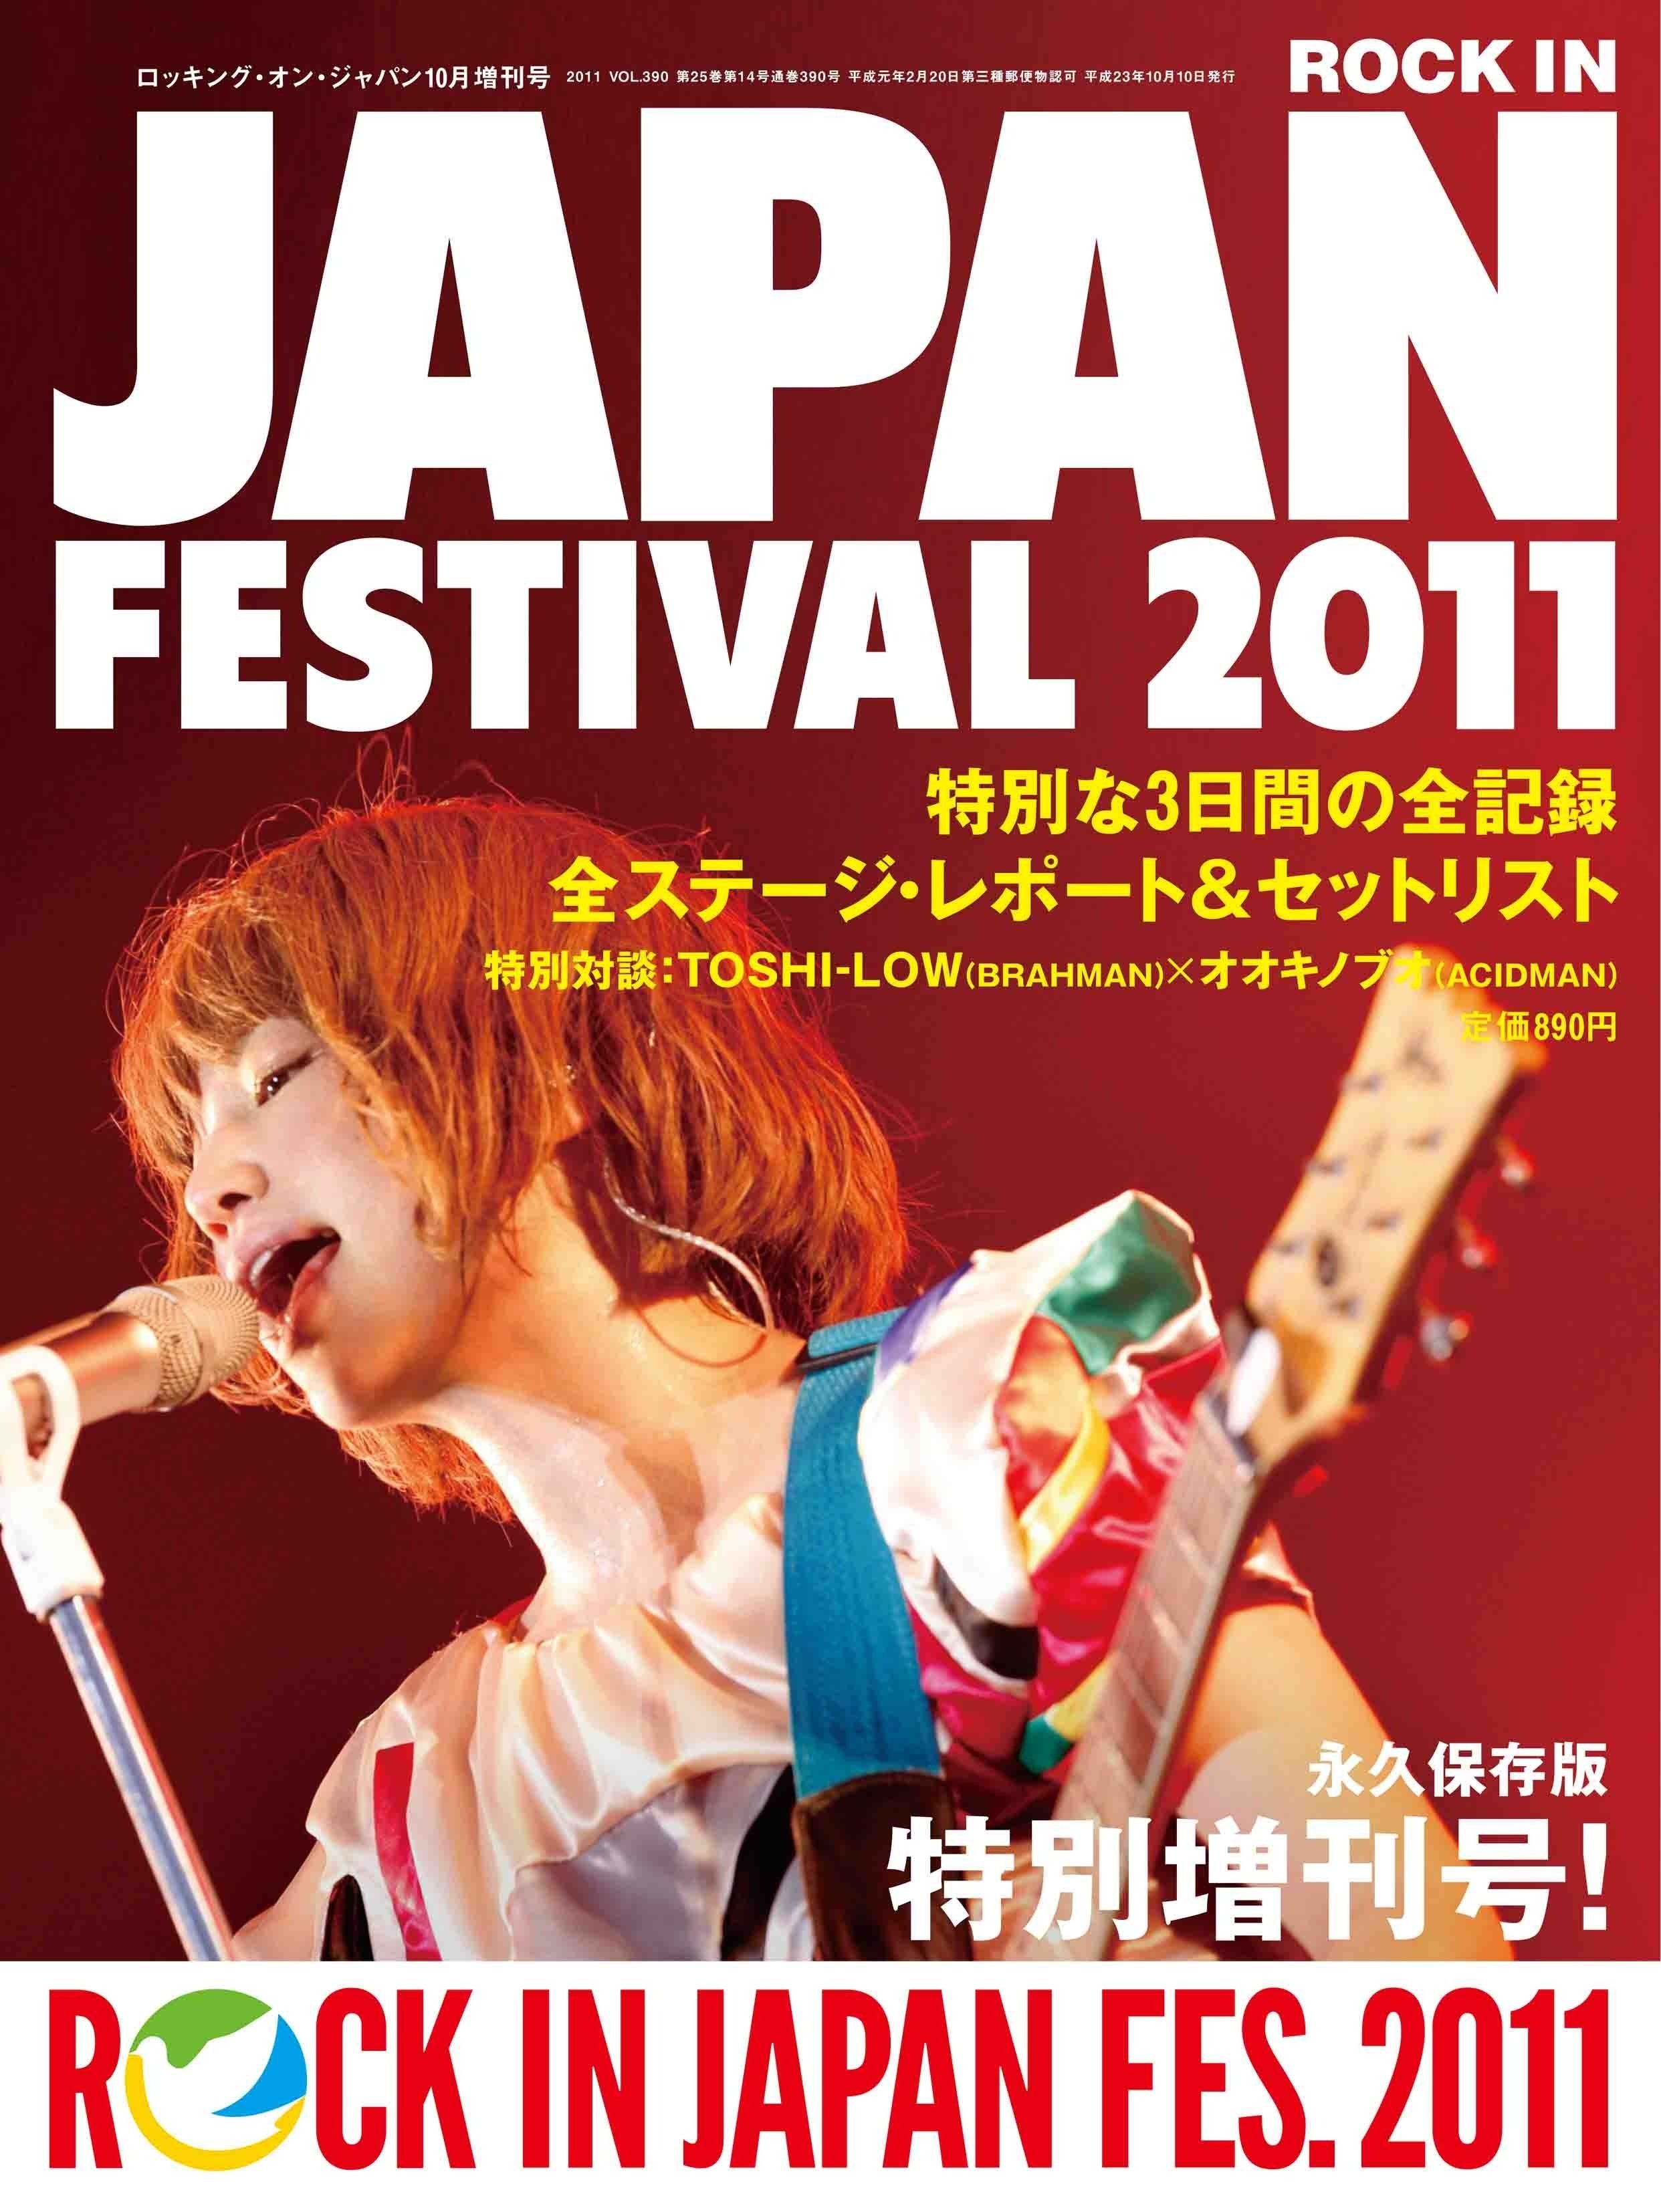 ROCKIN'ON JAPAN増刊号 ROCK IN JAPAN FES.2016 | その他 | 出版 | 事業内容 | ロッキング・オン・グループ  (rockin'on group)